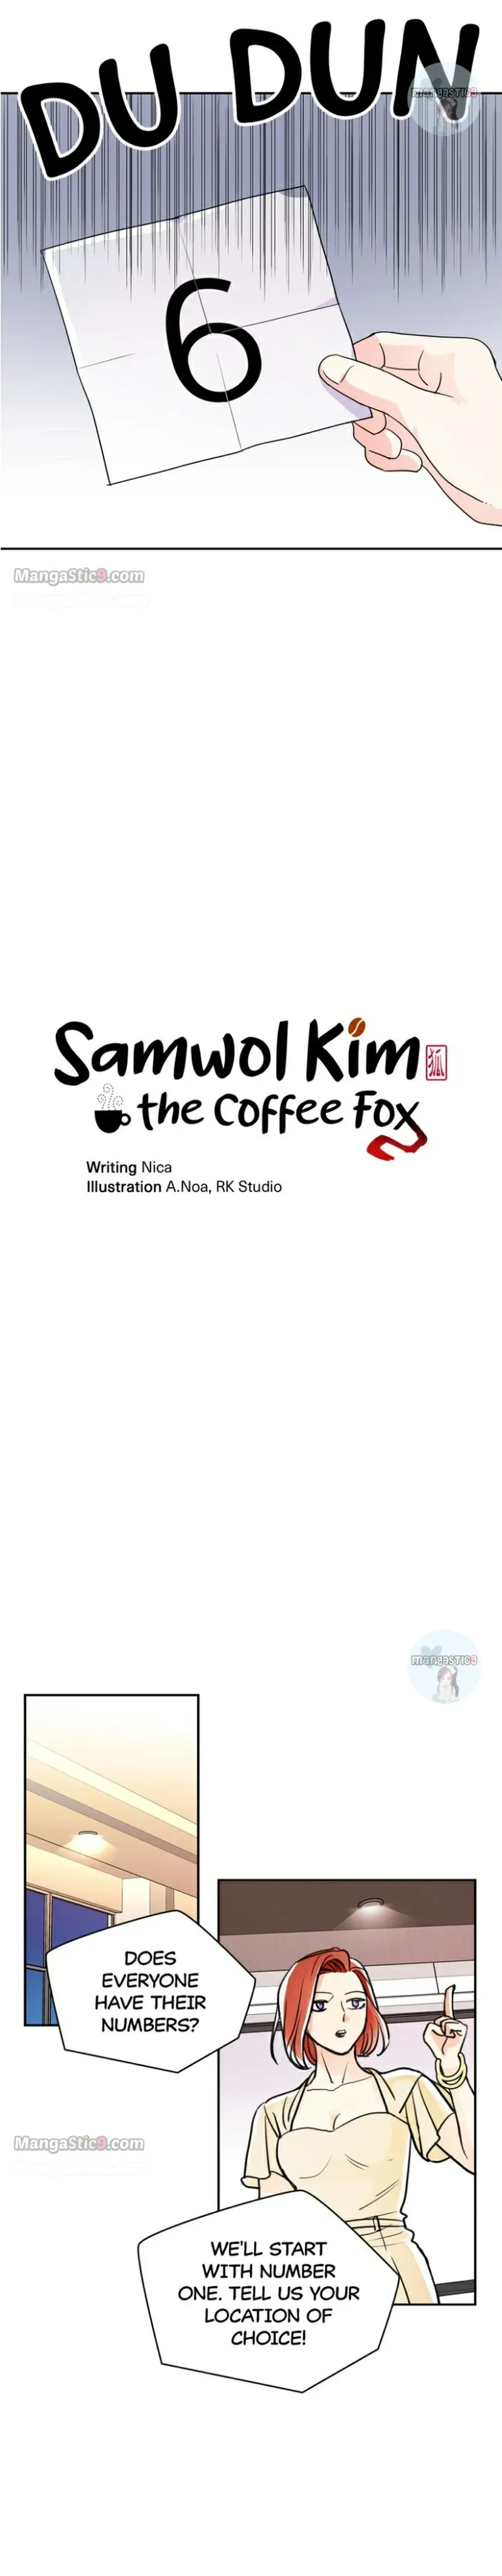 Samwol Kim the Coffee Fox Chapter 24 - Page 3